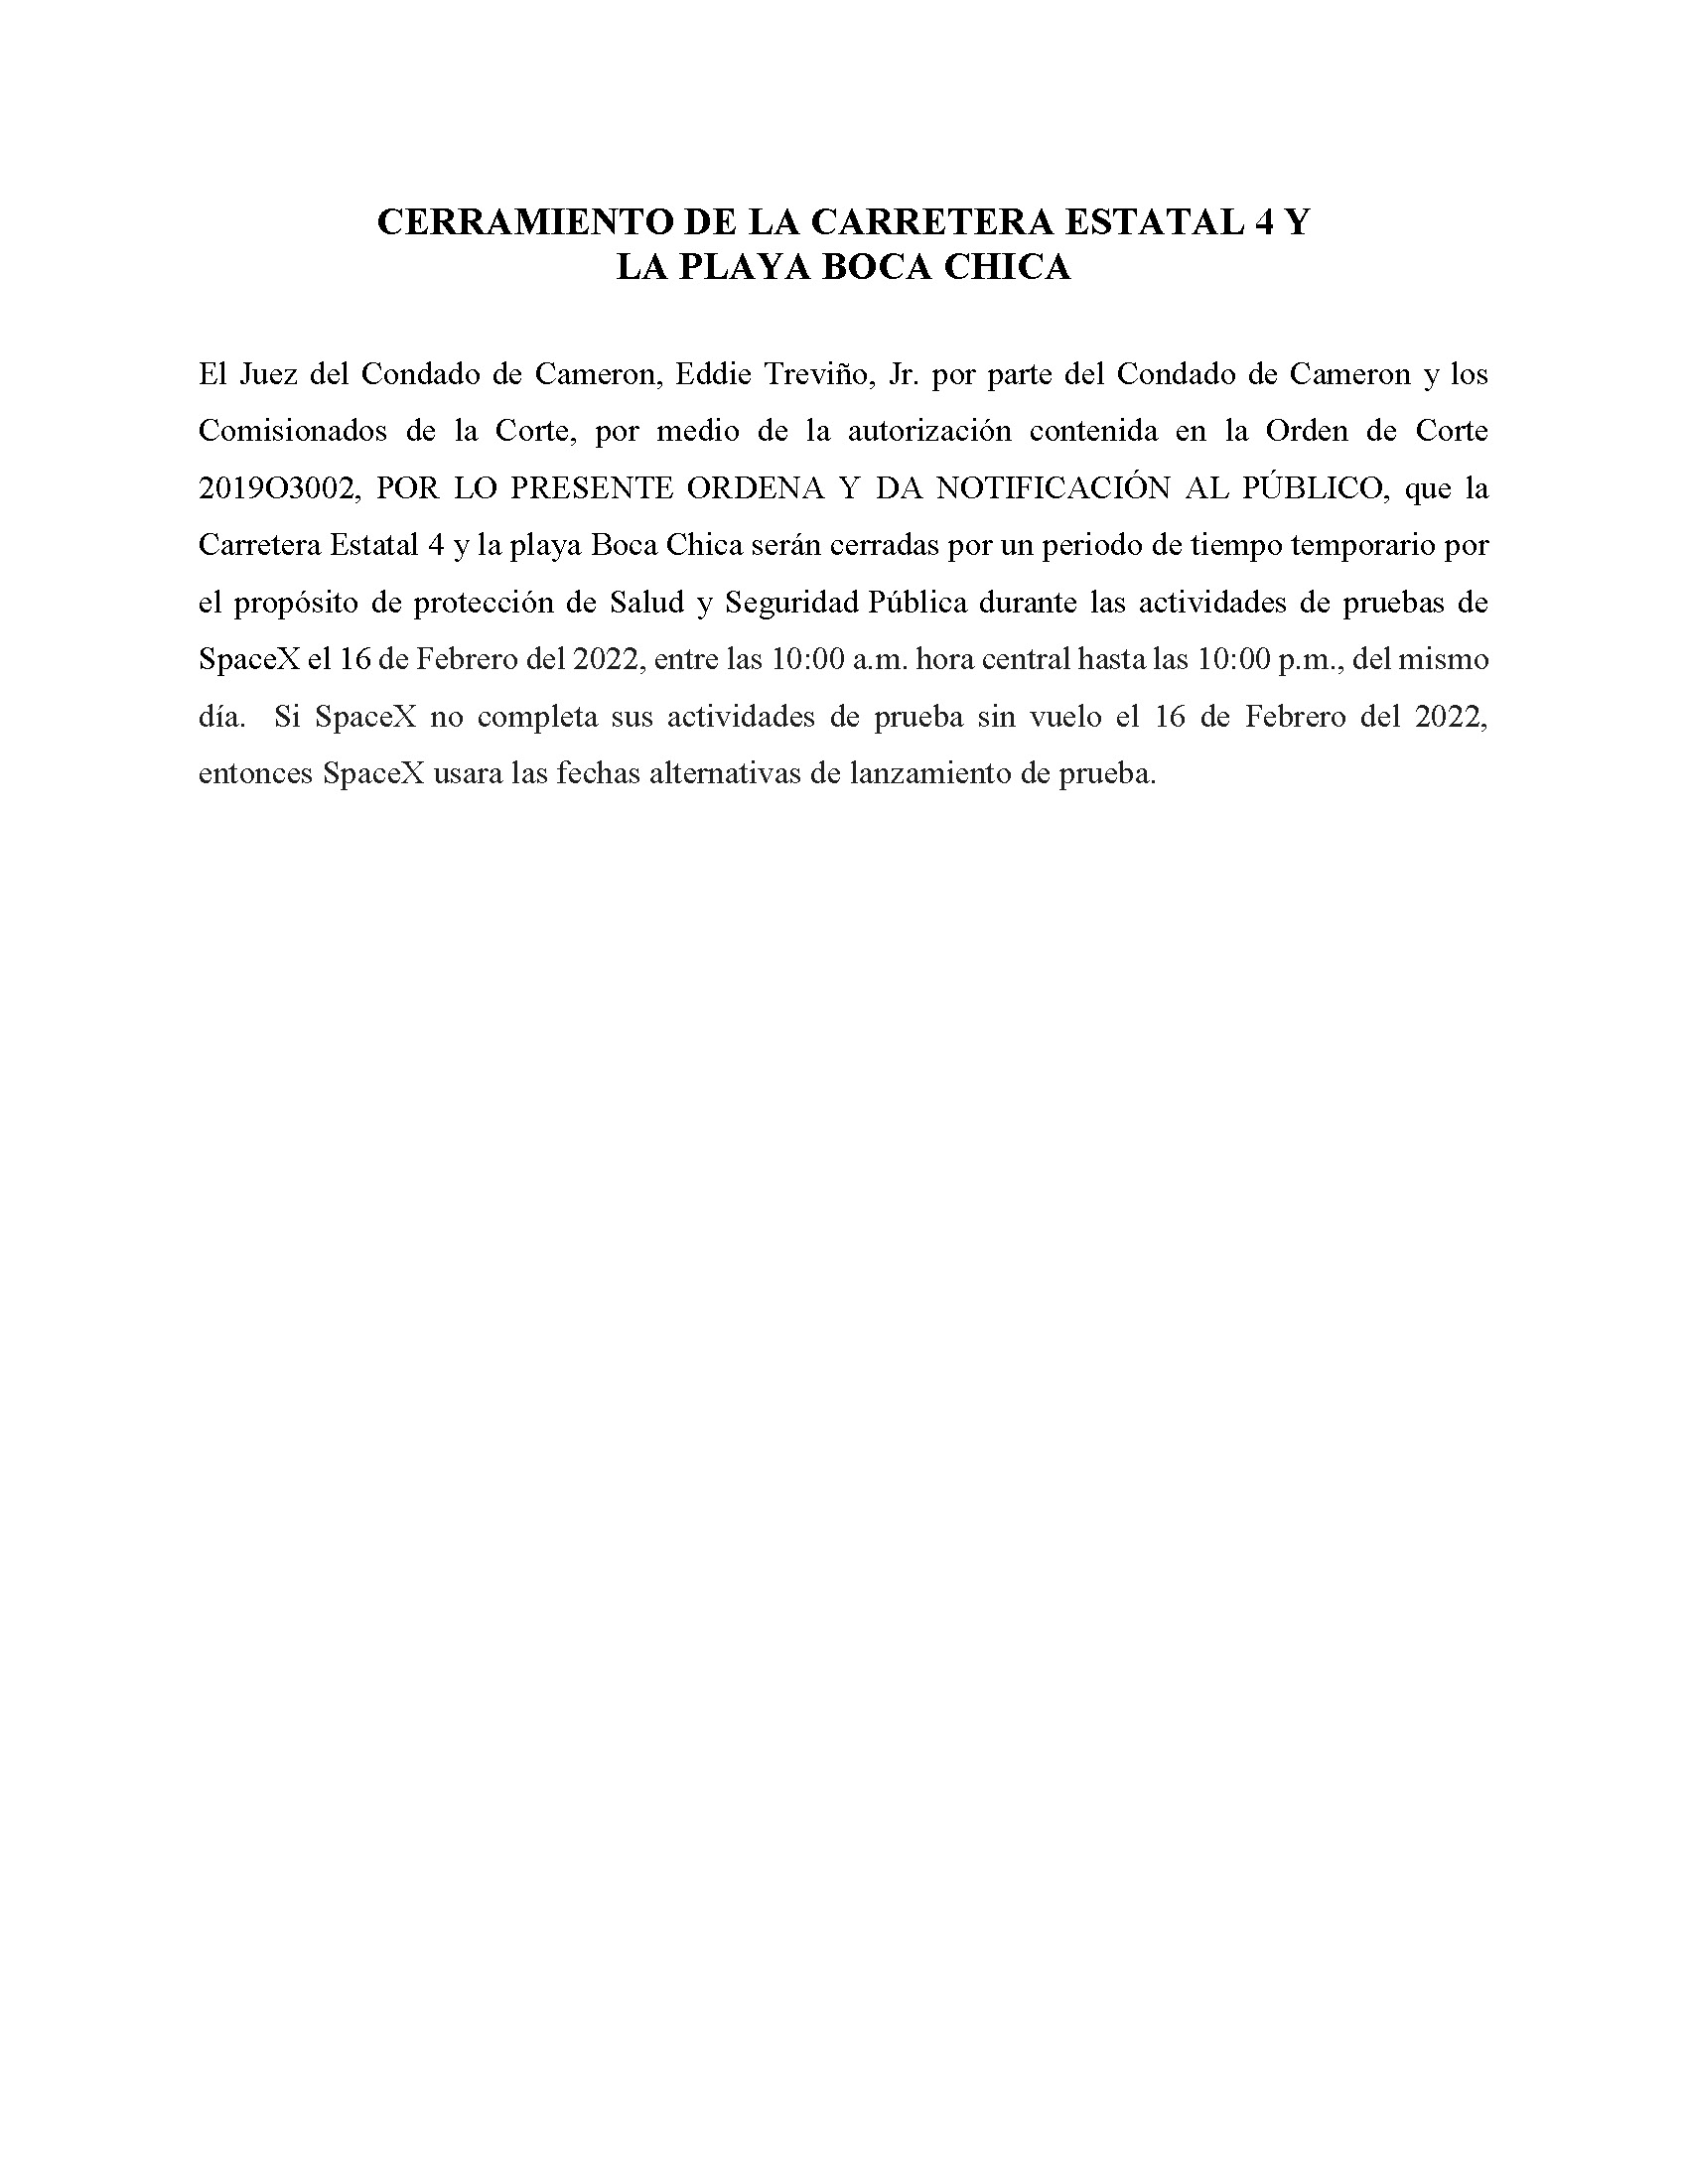 ORDER.CLOSURE OF HIGHWAY 4 Y LA PLAYA BOCA CHICA.SPANISH.02.16.2022